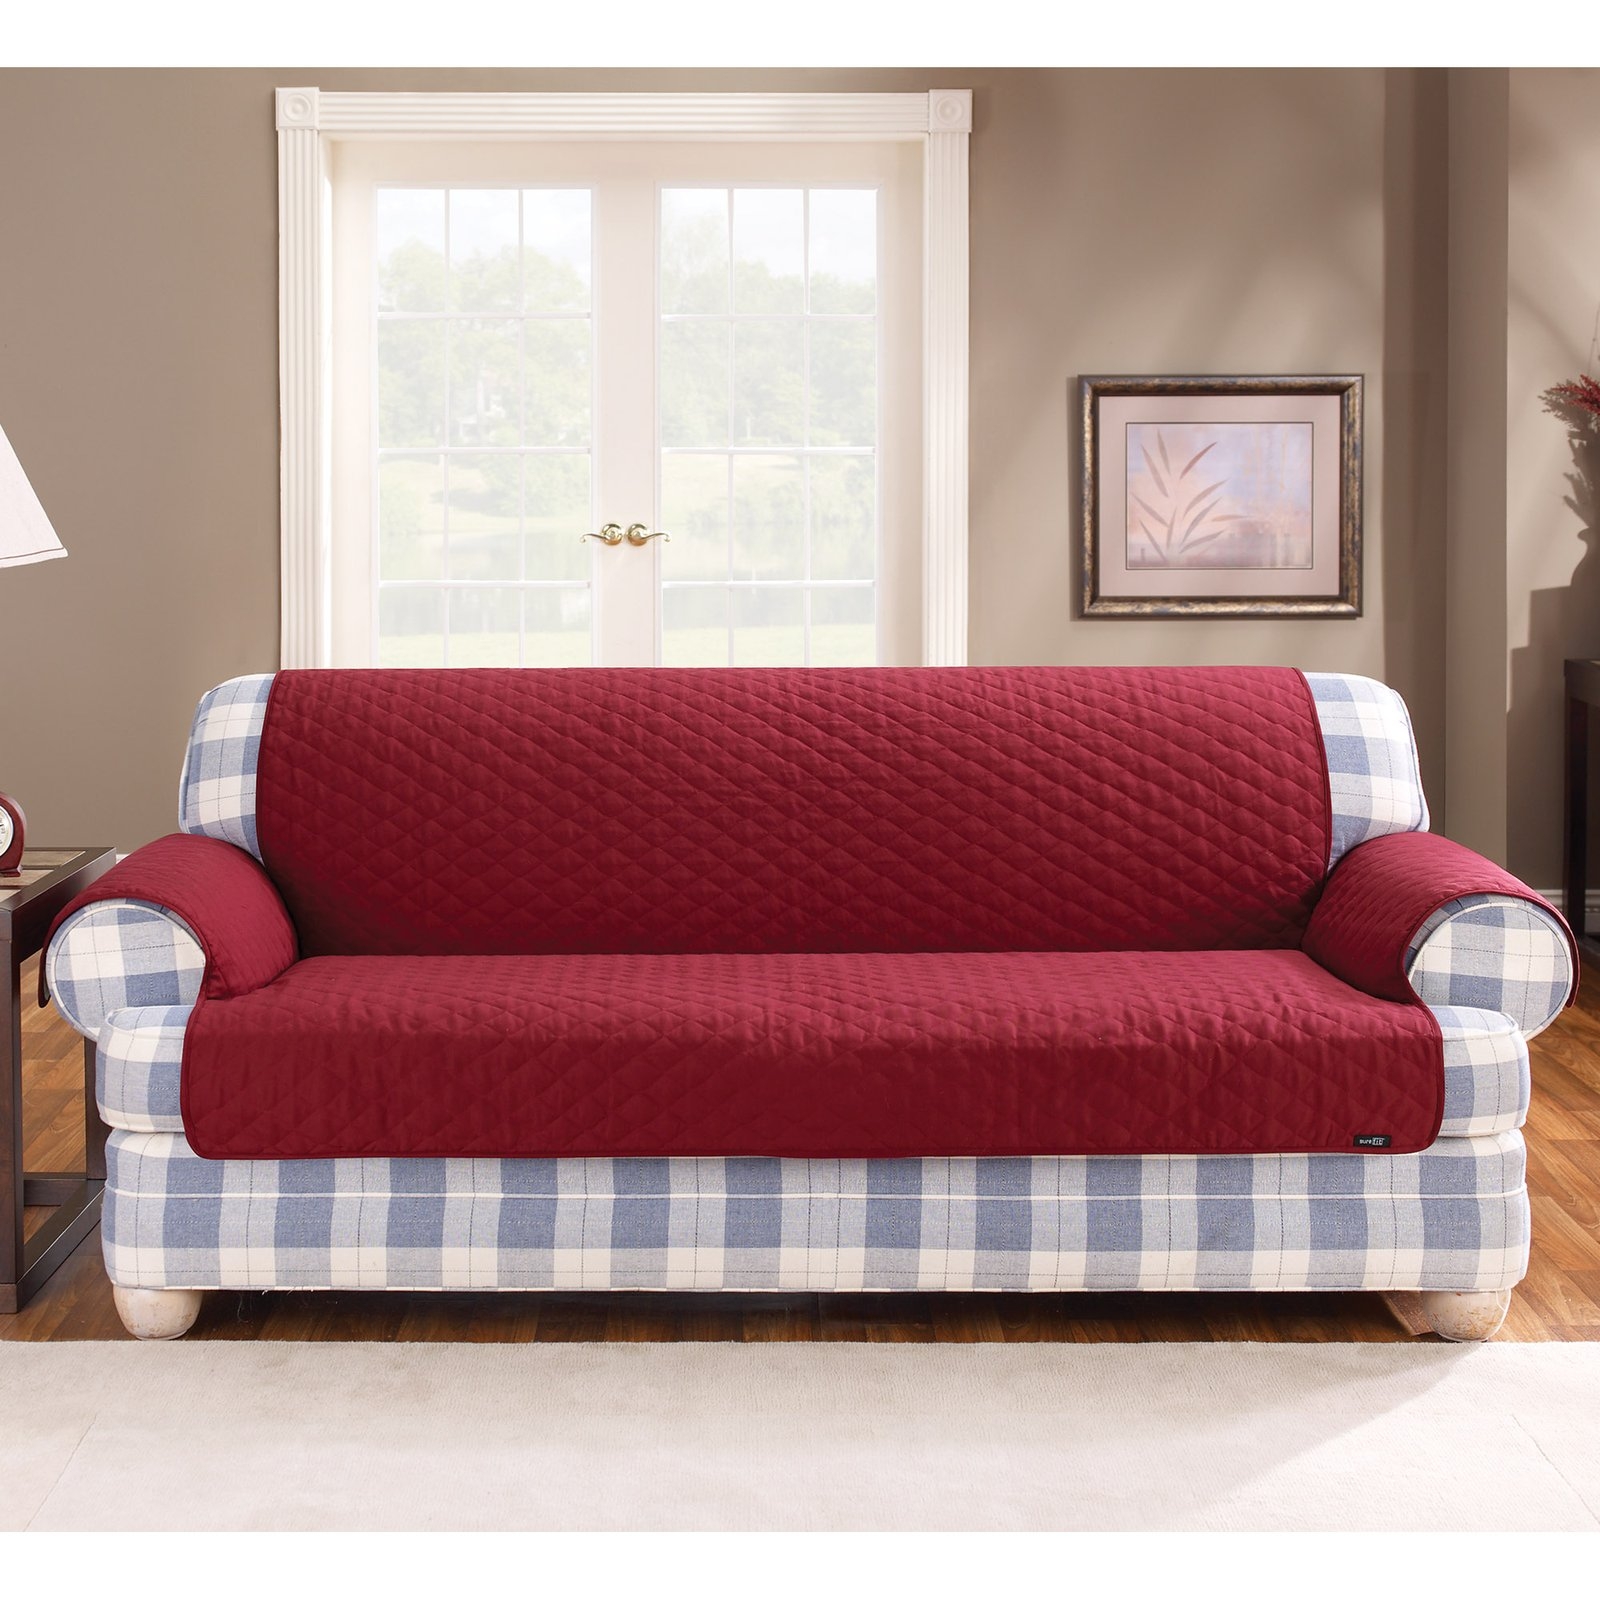 Cotton Duck Furniture Friend Sofa Cover in Claret